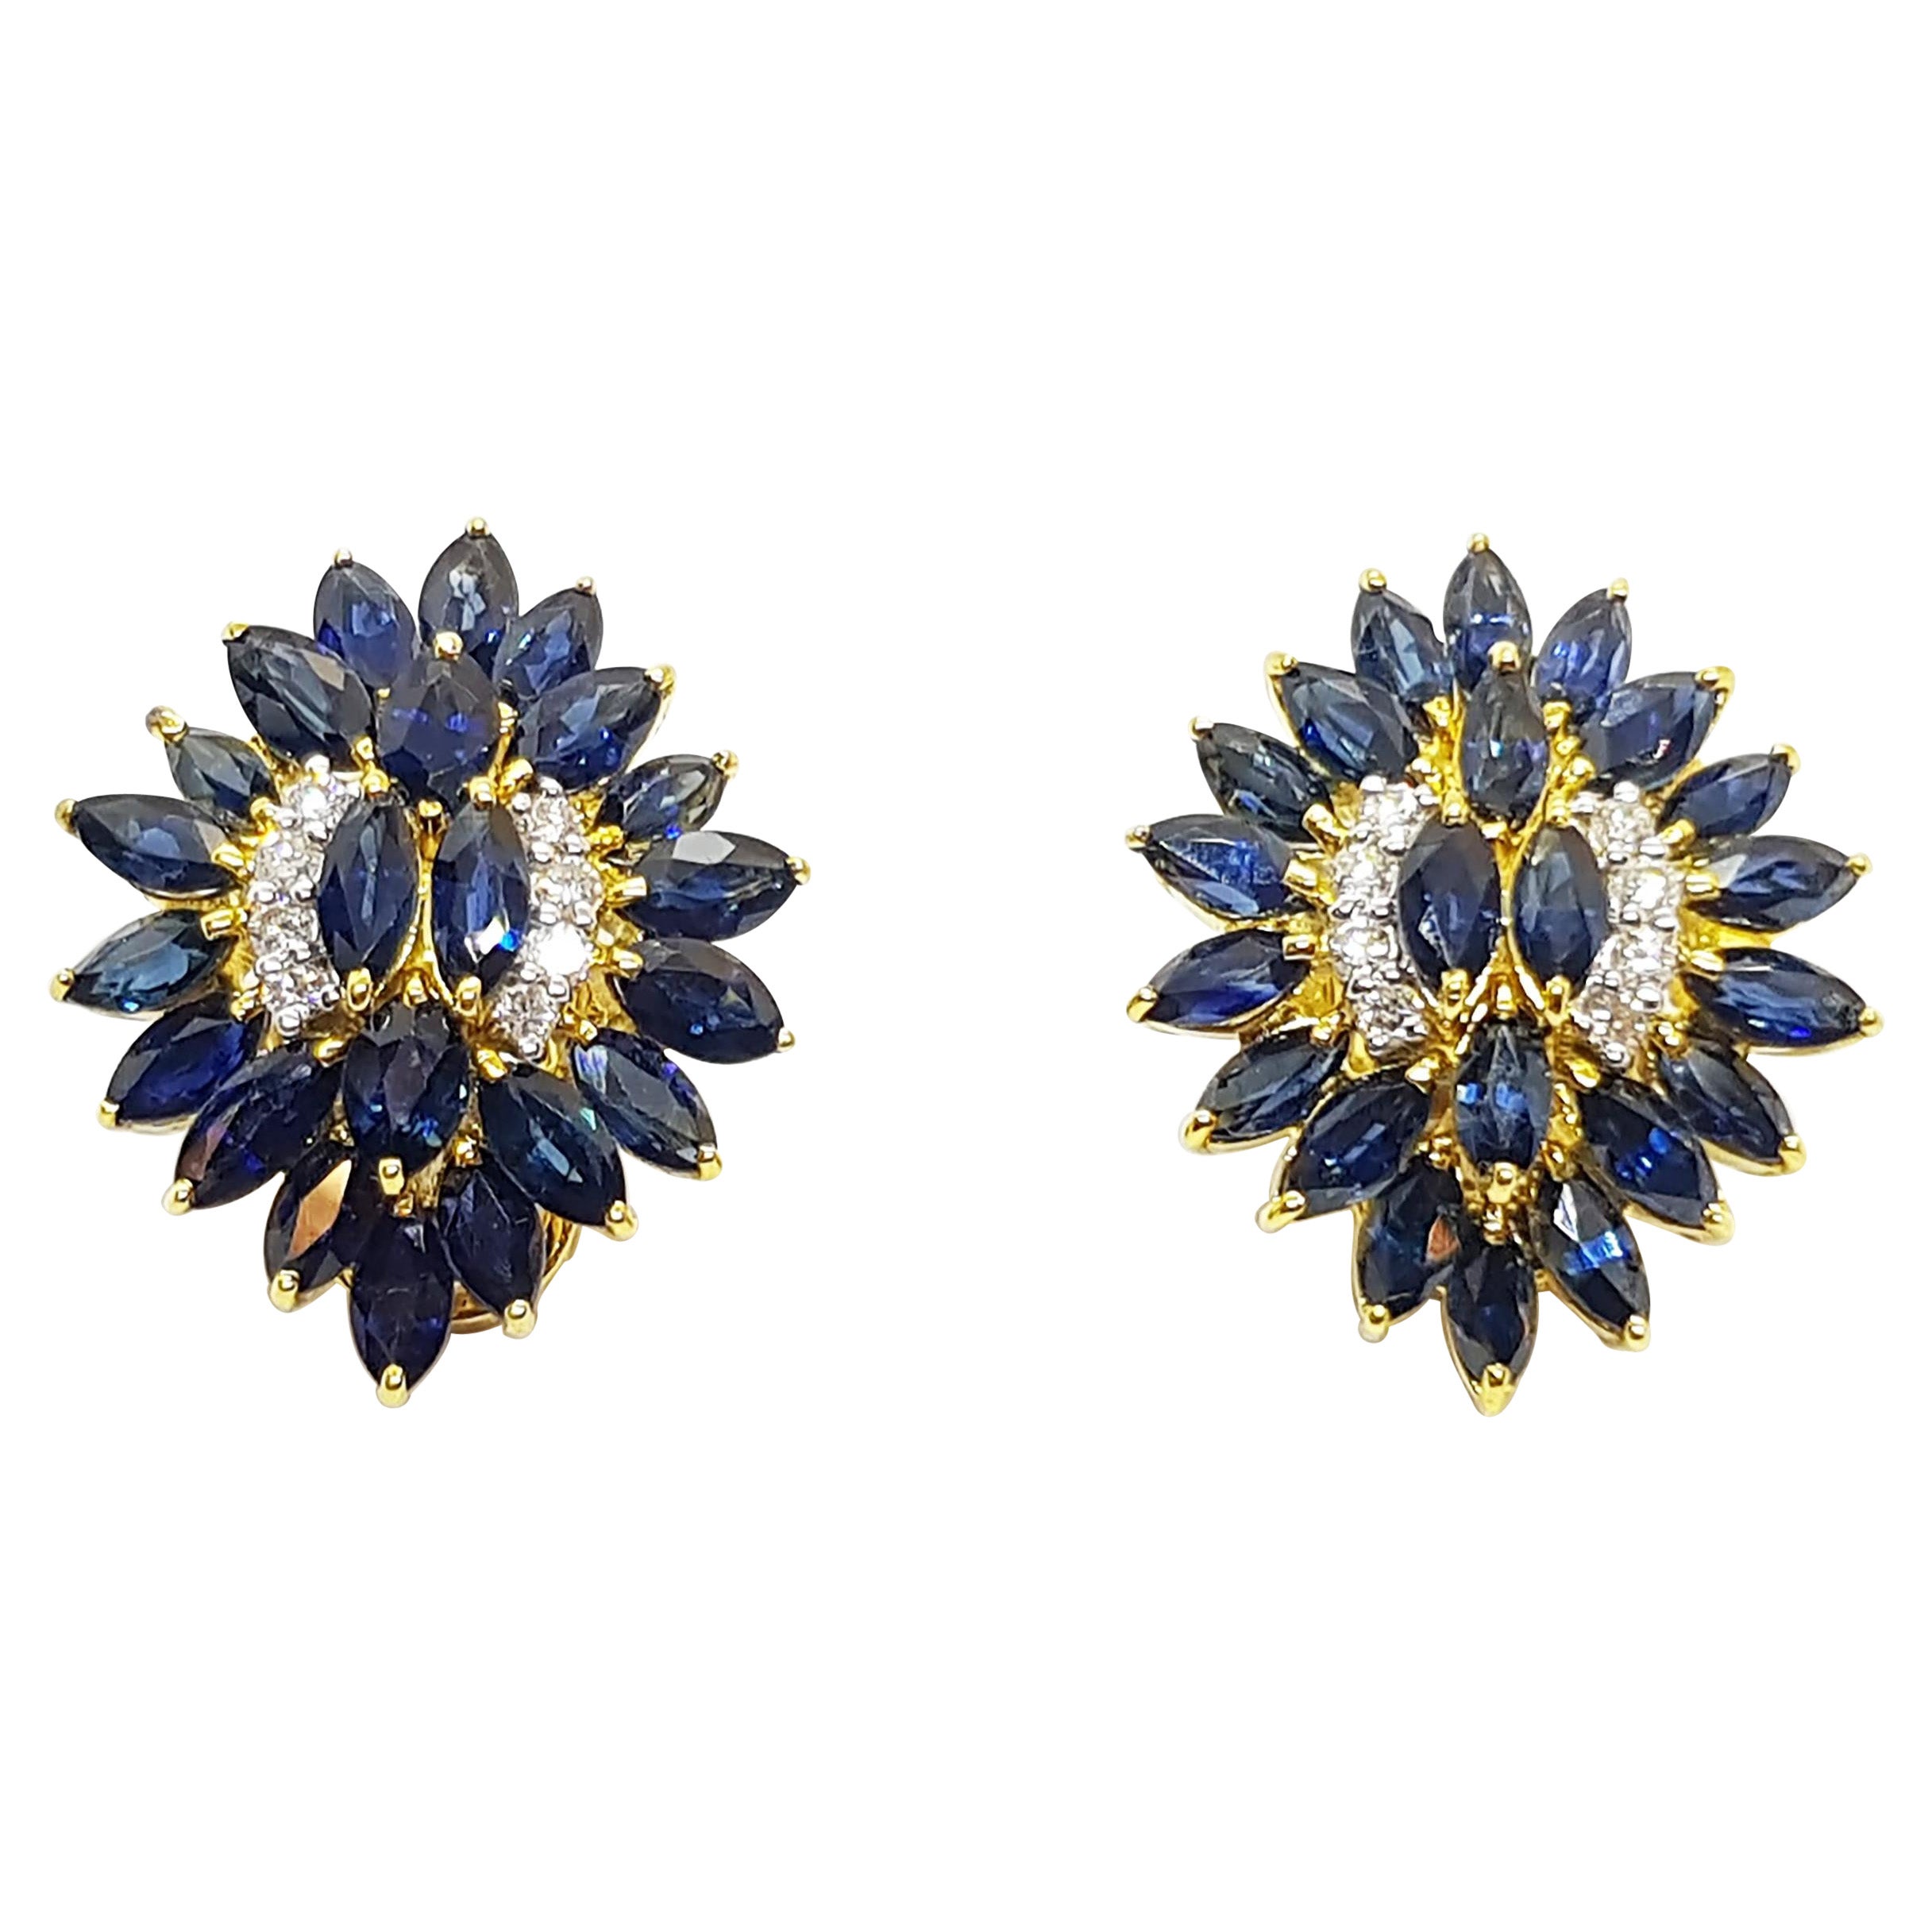 Blue Sapphire with Diamond Earrings set in 18 Karat Gold Settings For Sale